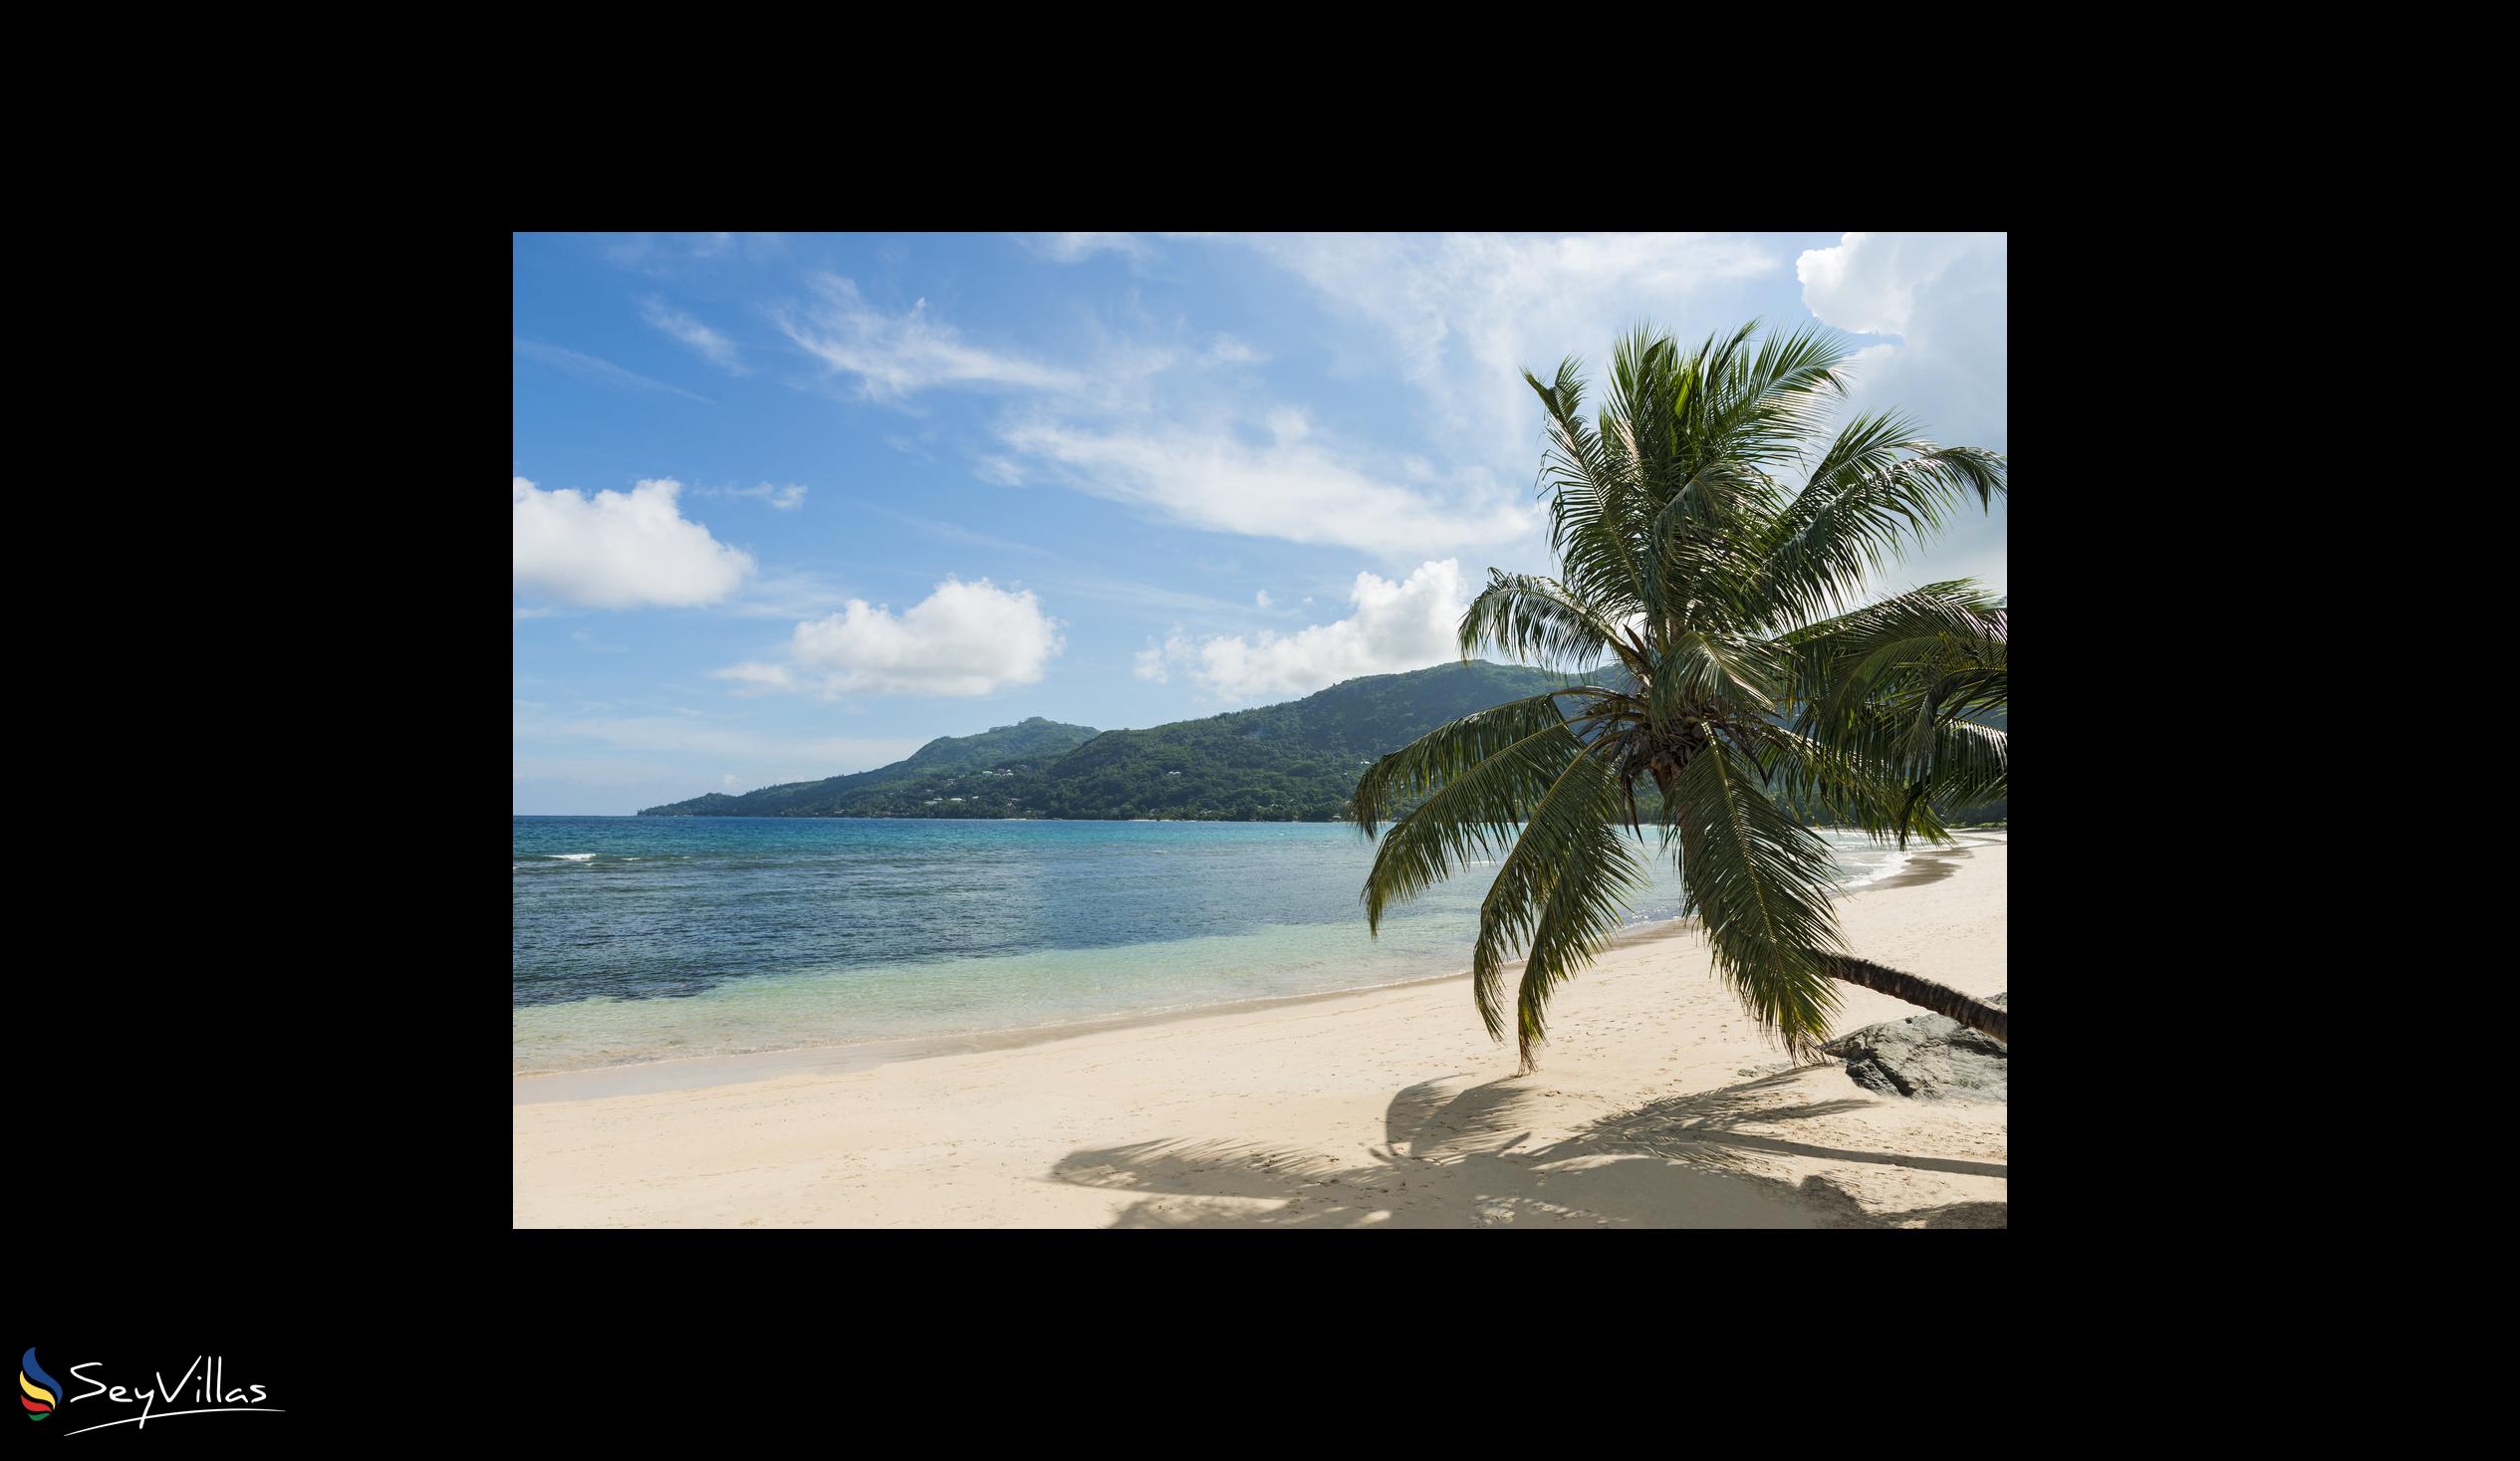 Foto 30: Fisherman's Cove Resort - Plages - Mahé (Seychelles)